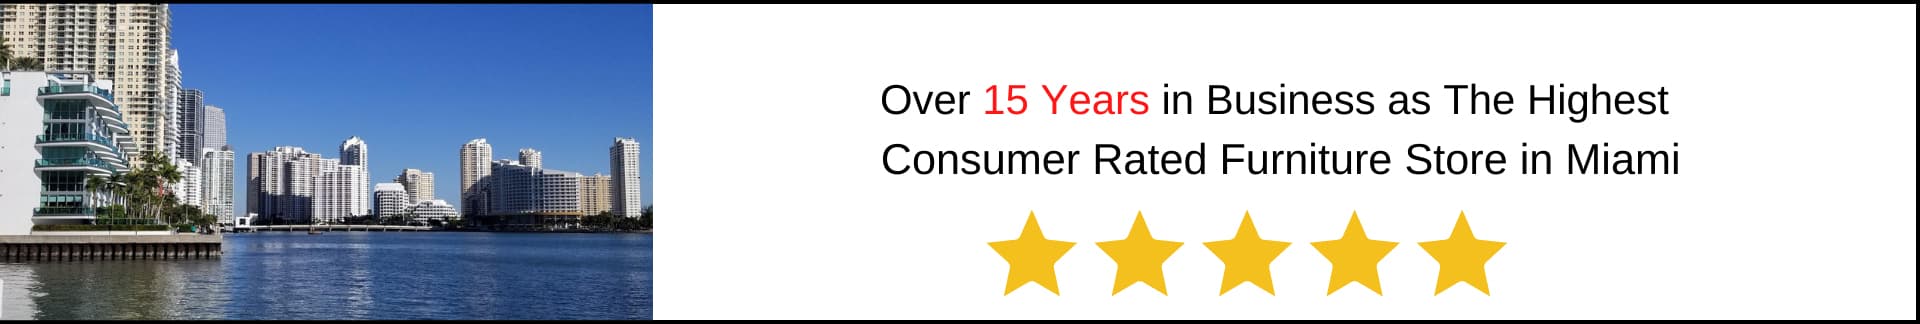 Consumer Rating